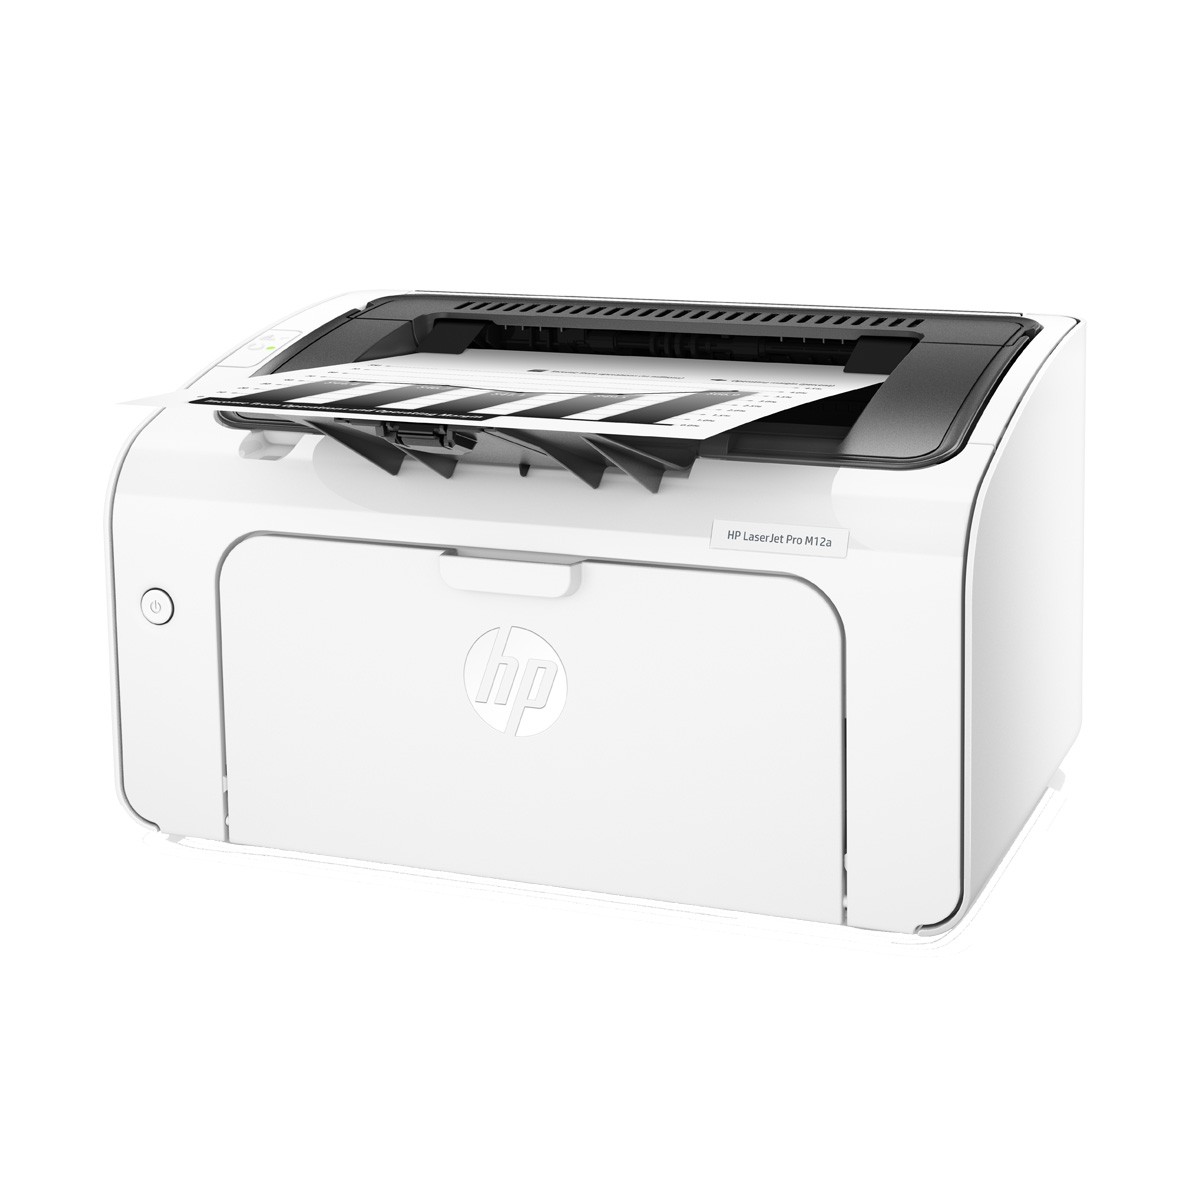 HP LaserJet Pro M12a 18 PPM Black And White Laser Printer